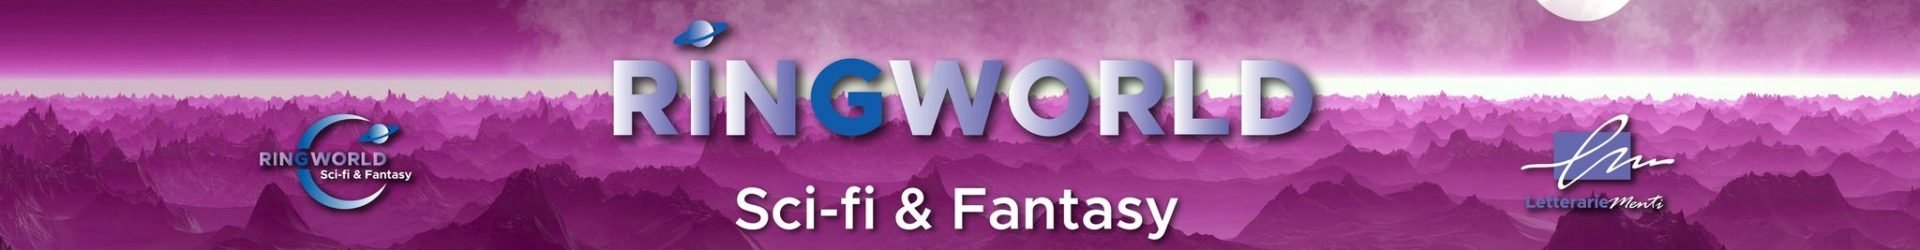 Ringworld sci-fi&fantasy